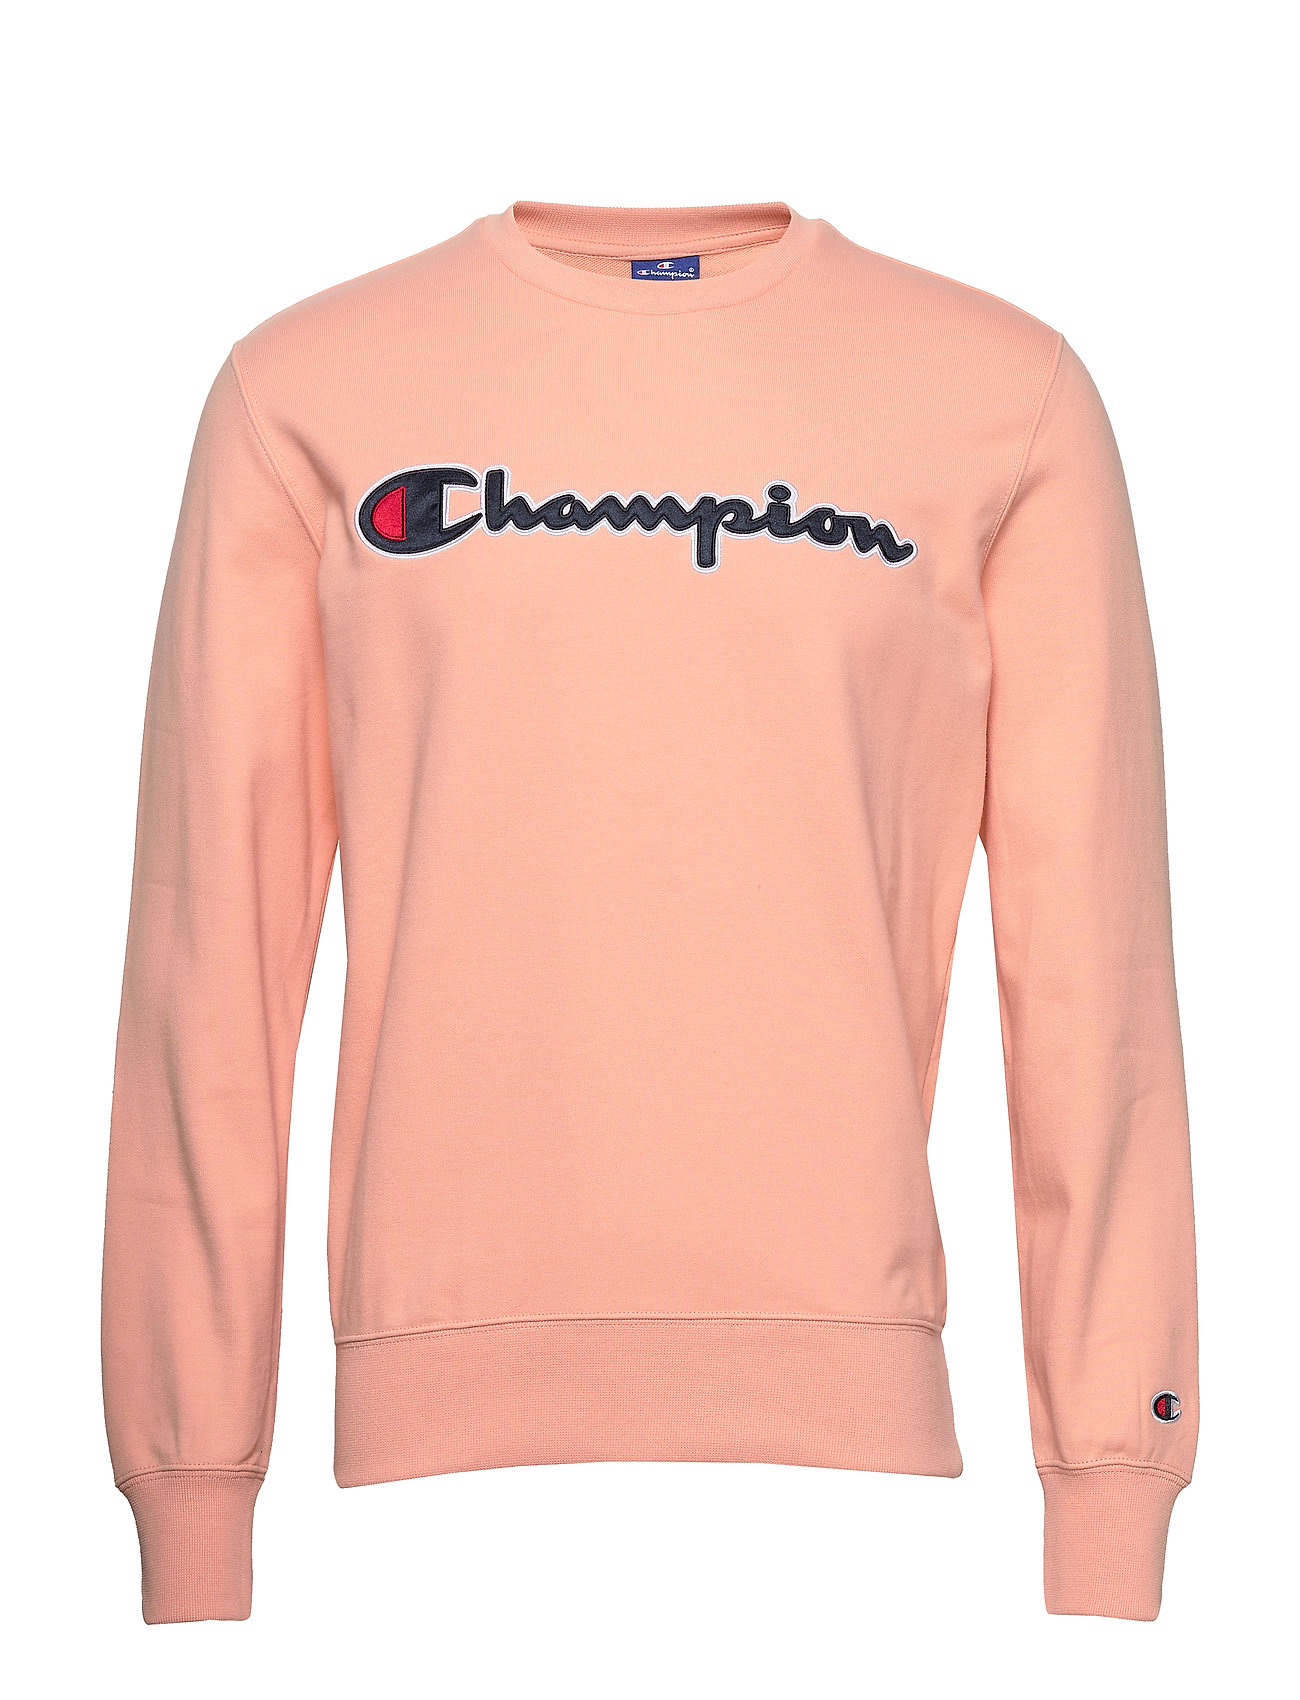 champion coral sweatshirt